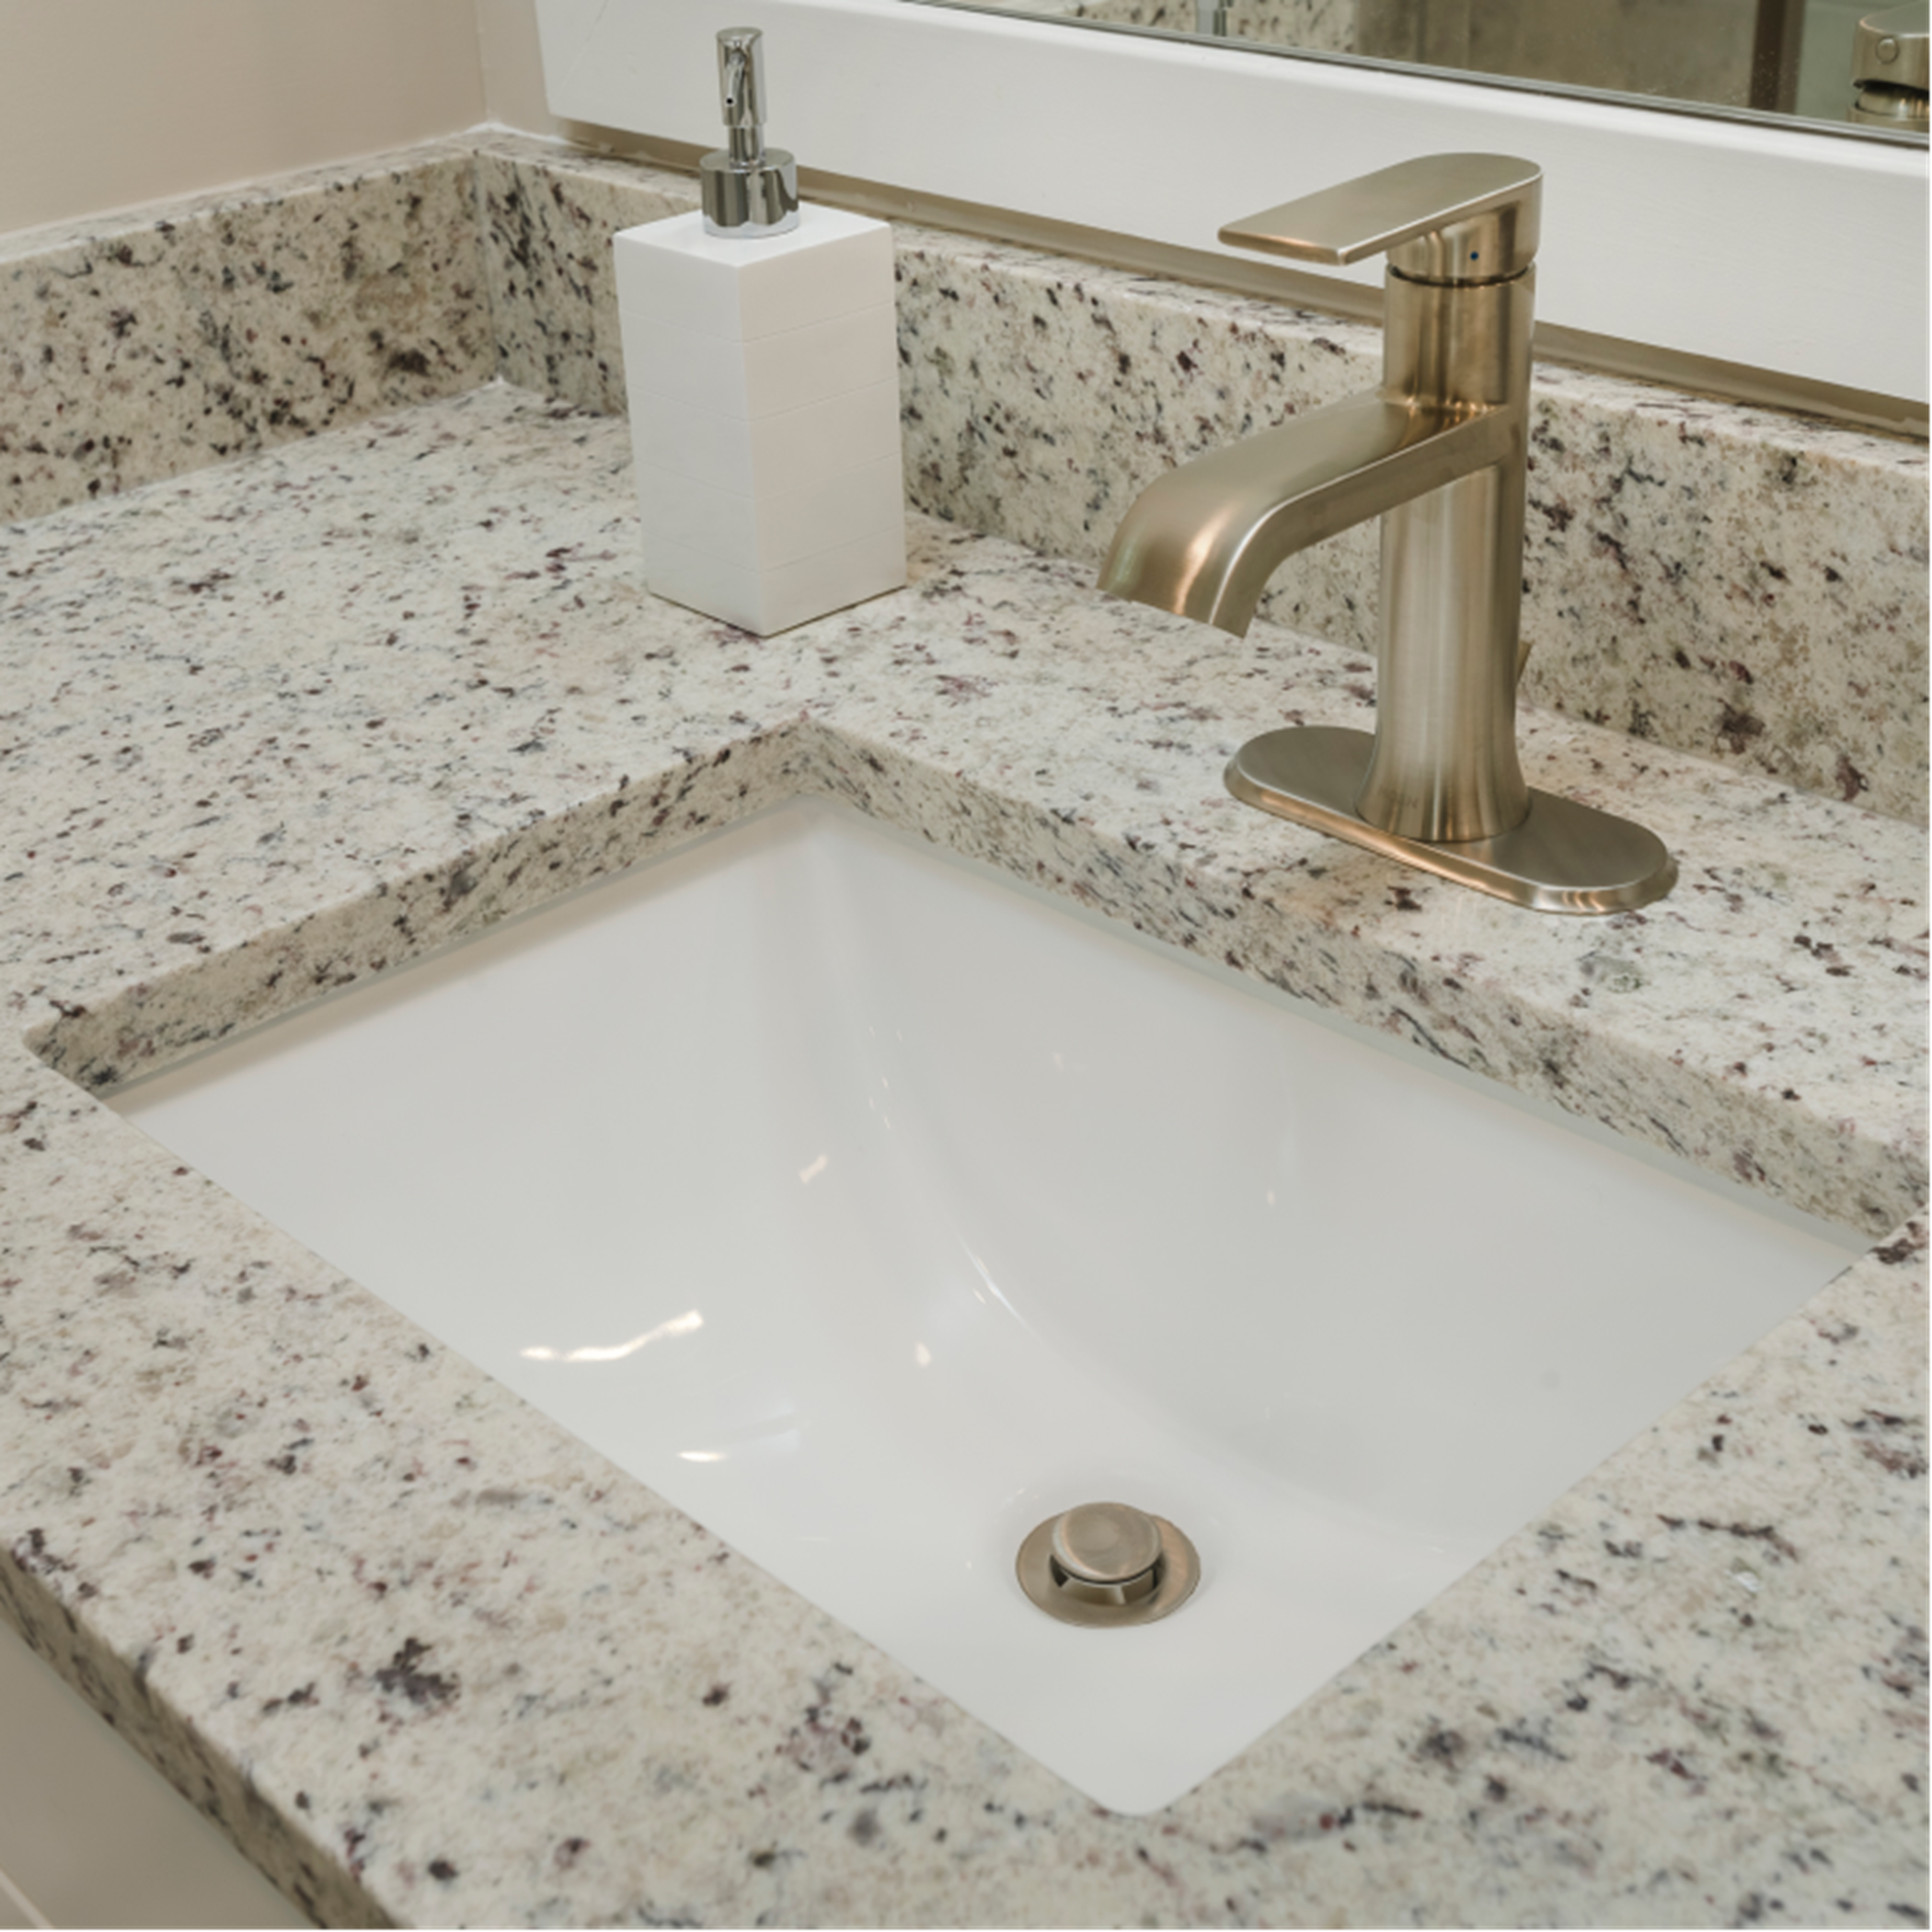 Easton owners suite bathroom vanity, countertop and faucet closeup